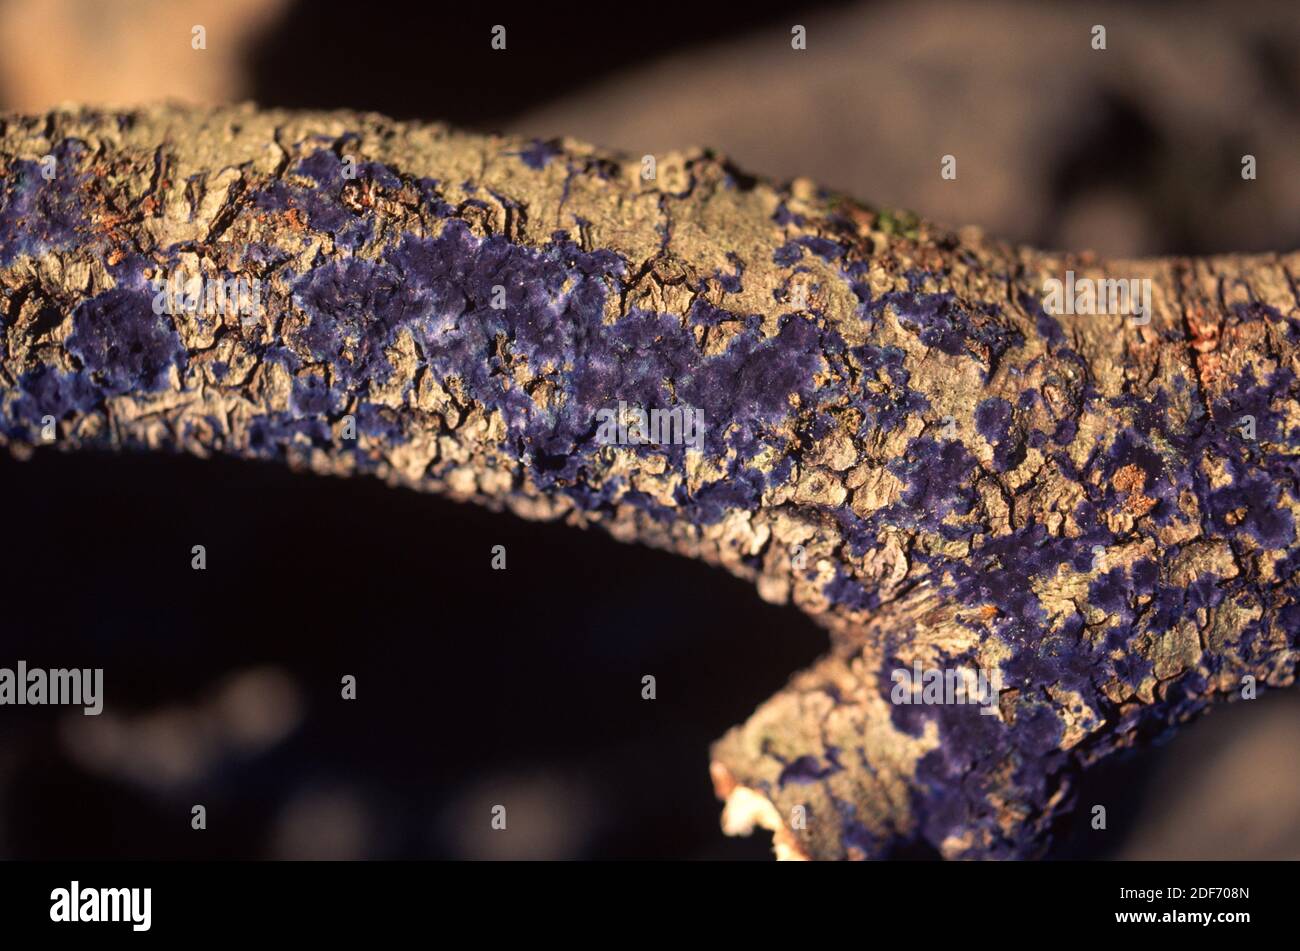 Cobalt crust fungus or deep blue fungus (Pulcherricium caeruleum or Terana caerulea) is a crust fungus very colorful. This photo was taken in Stock Photo